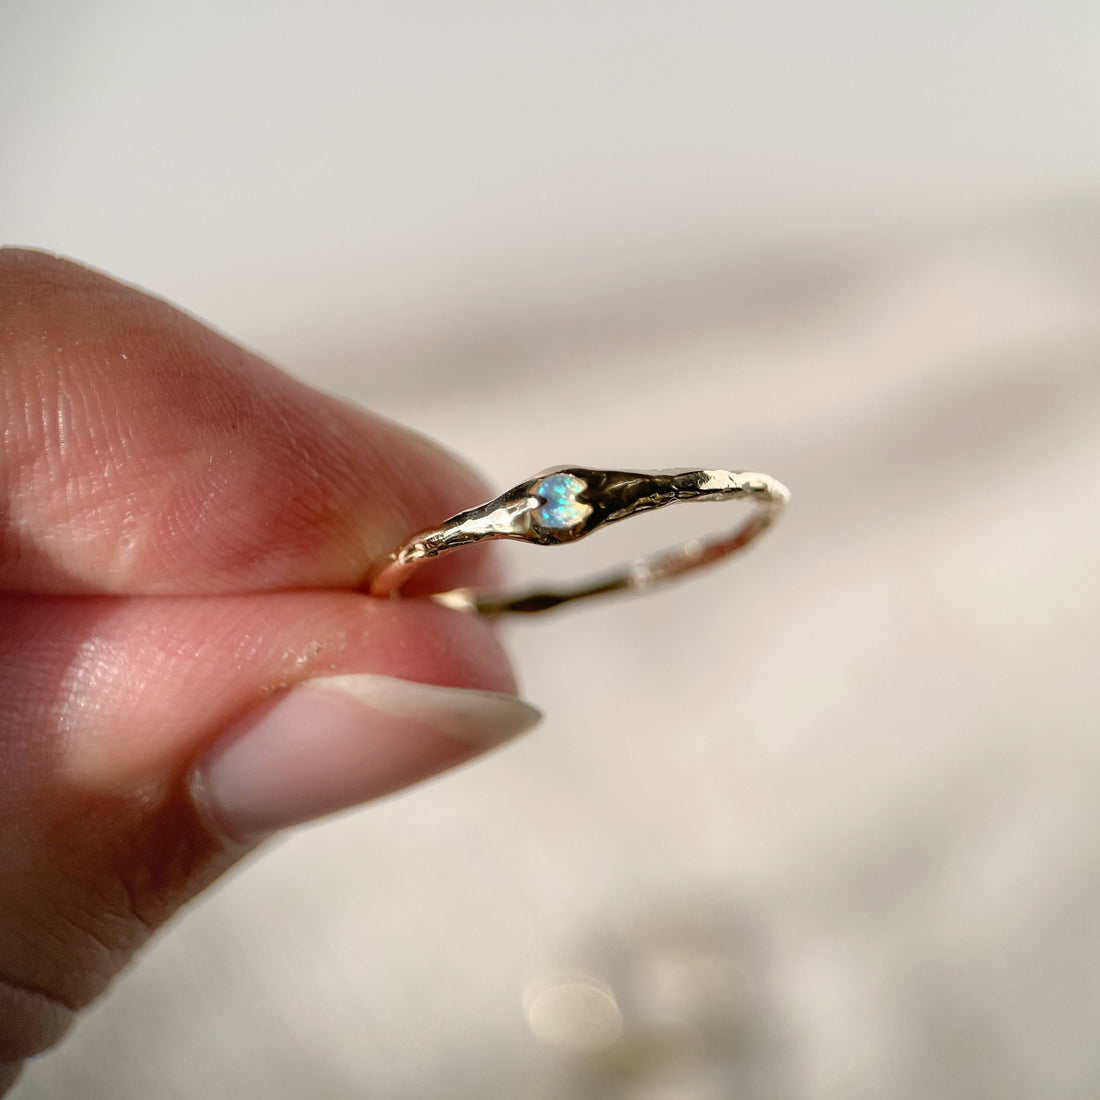 A tiny opal is prong set on a narrow 14k gold band.